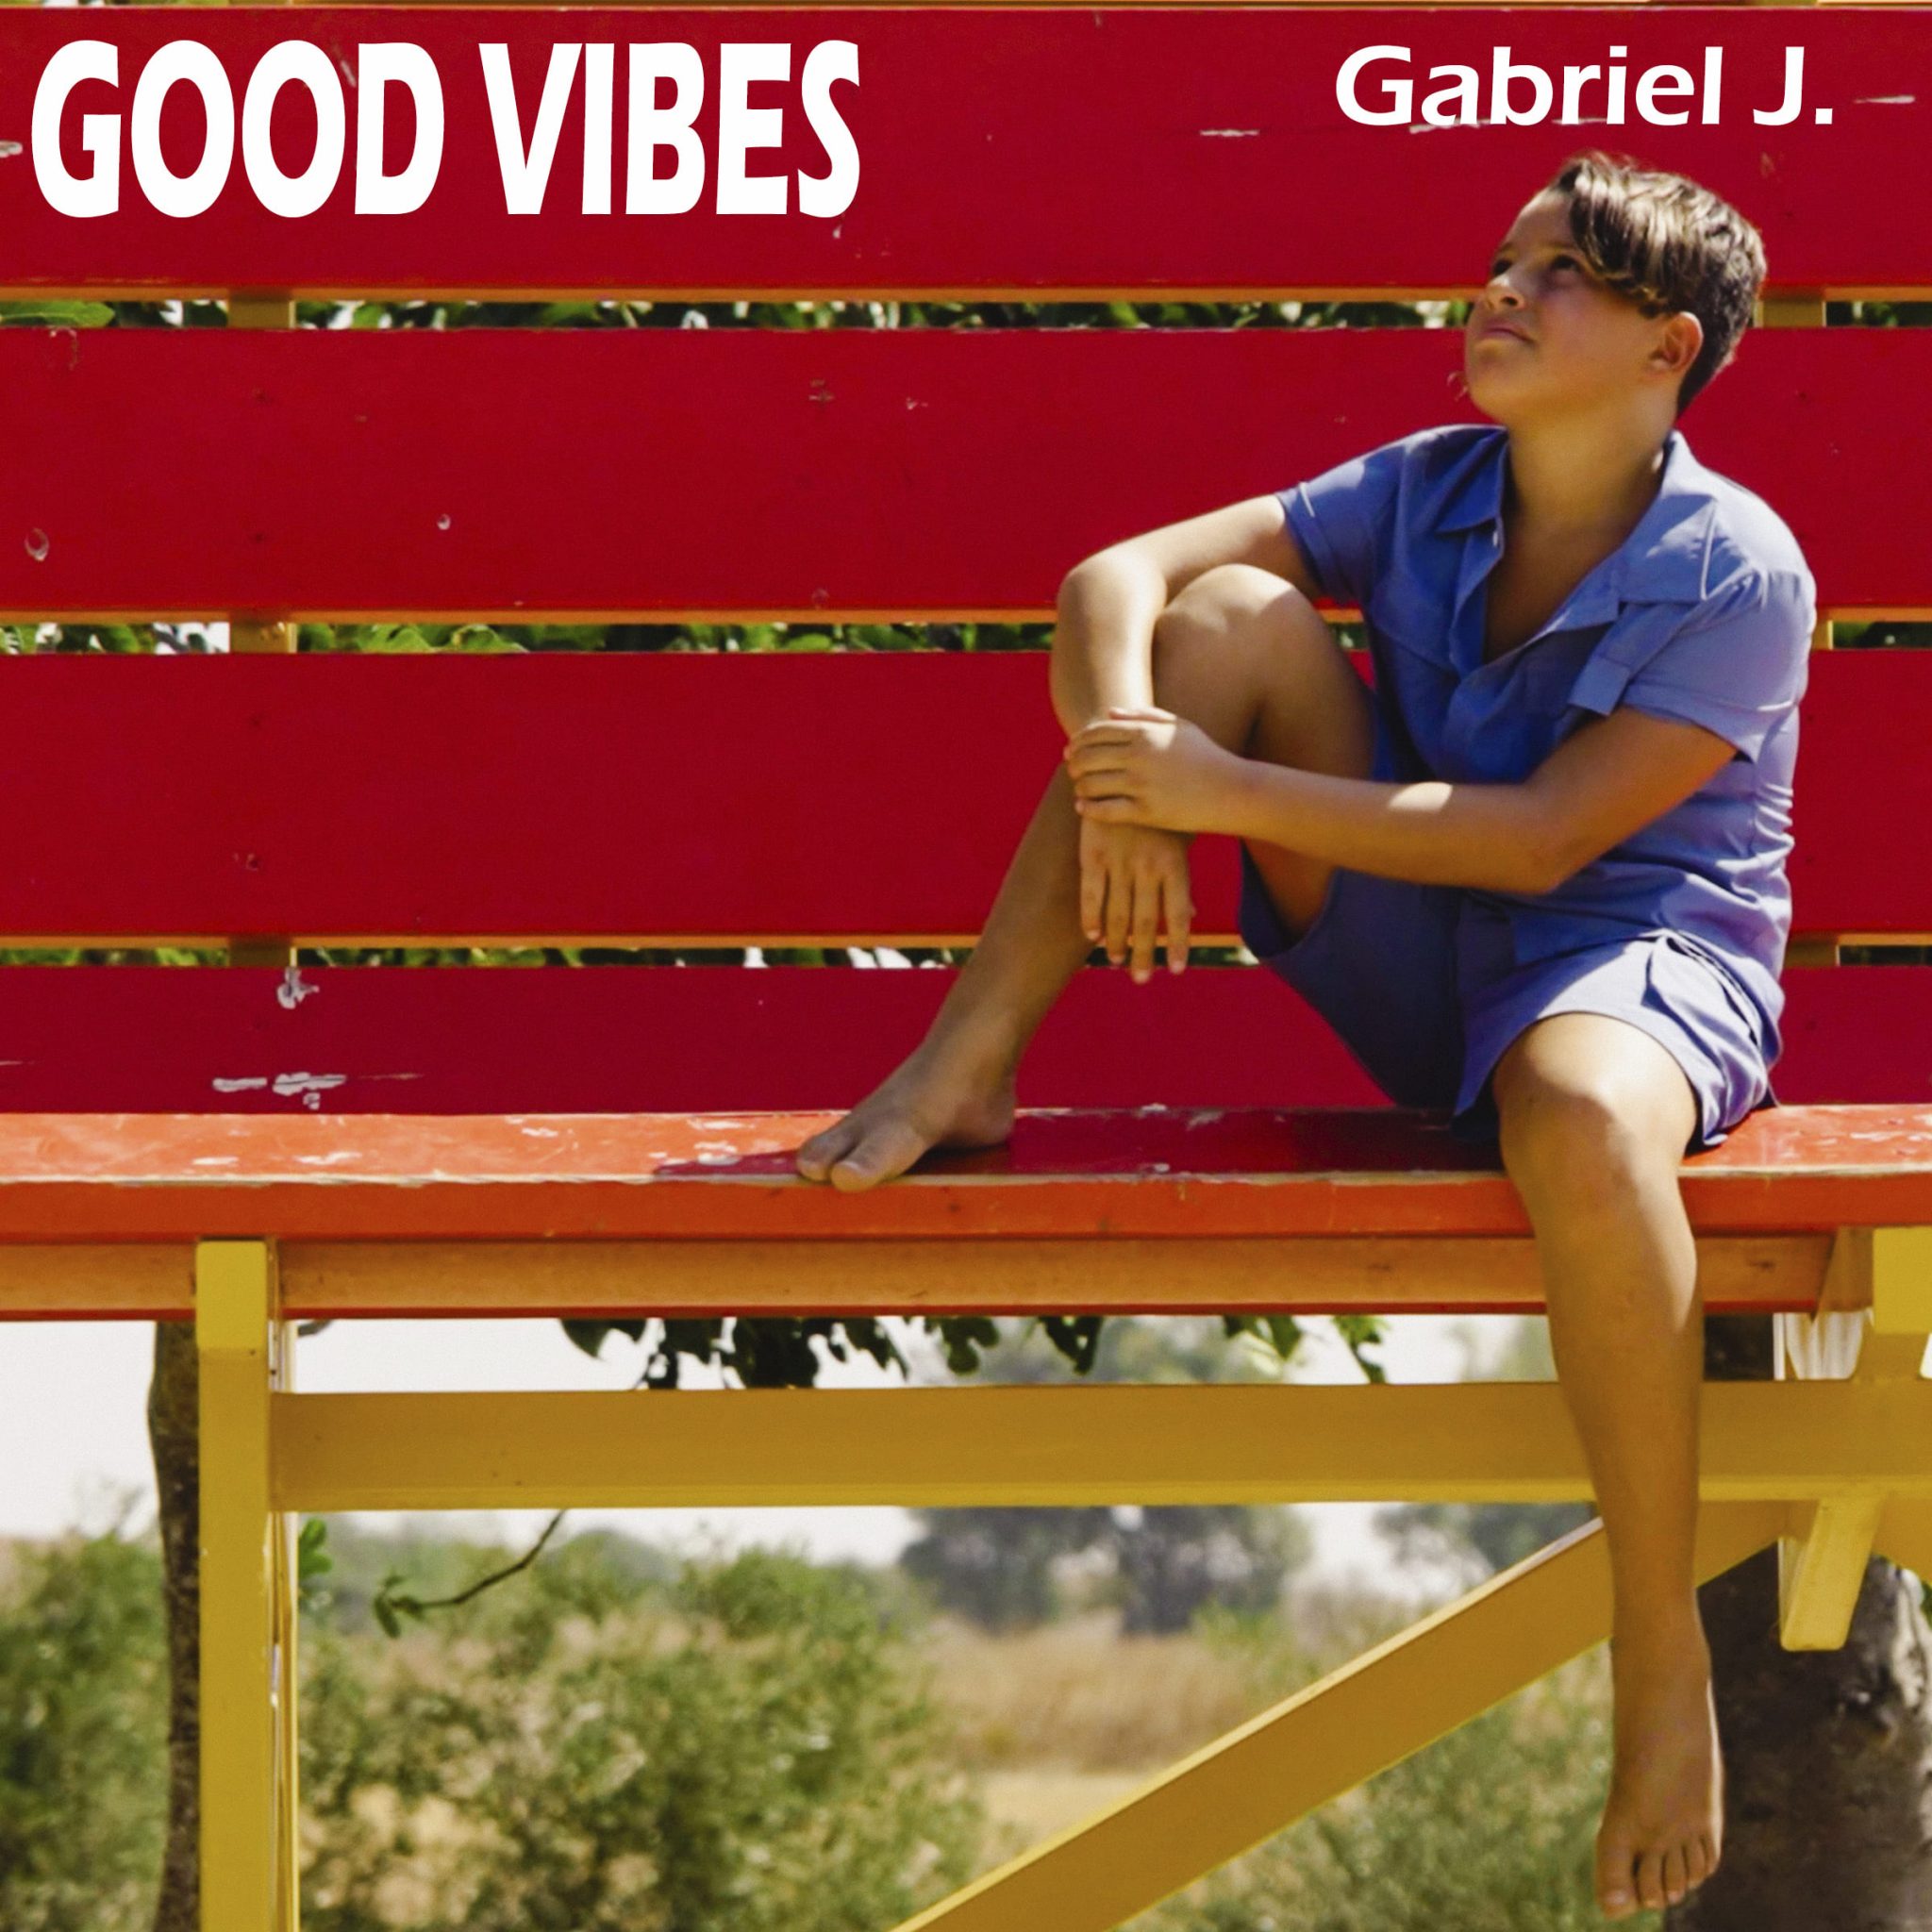 GOOD VIBES - GABRIEL J.